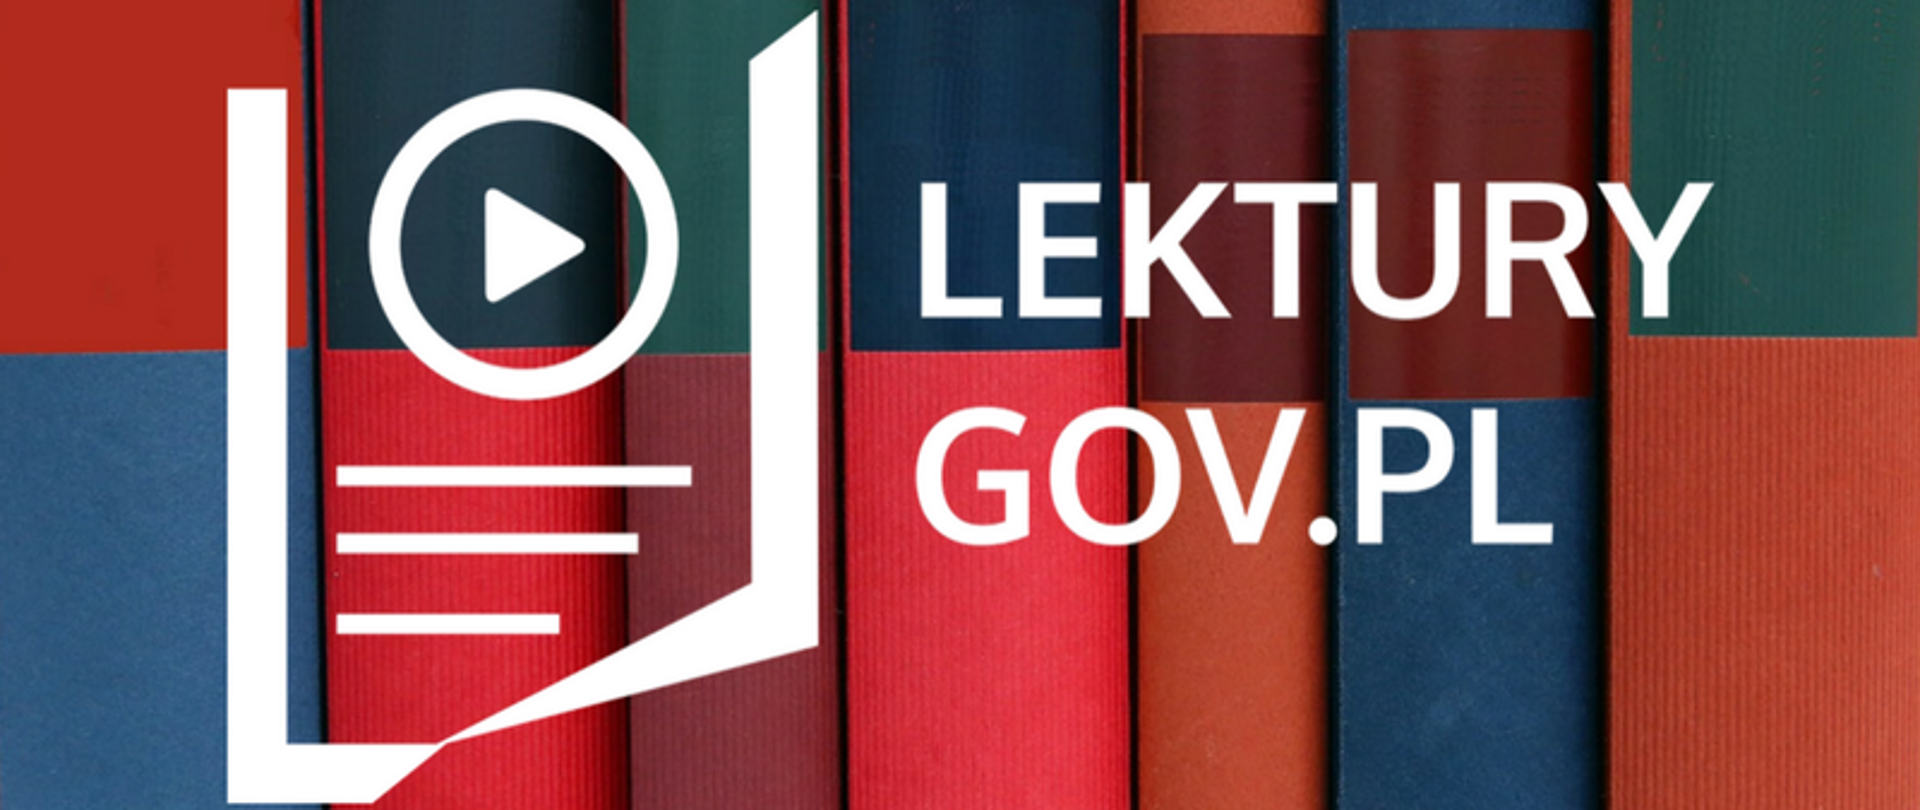 lektury.gov.pl